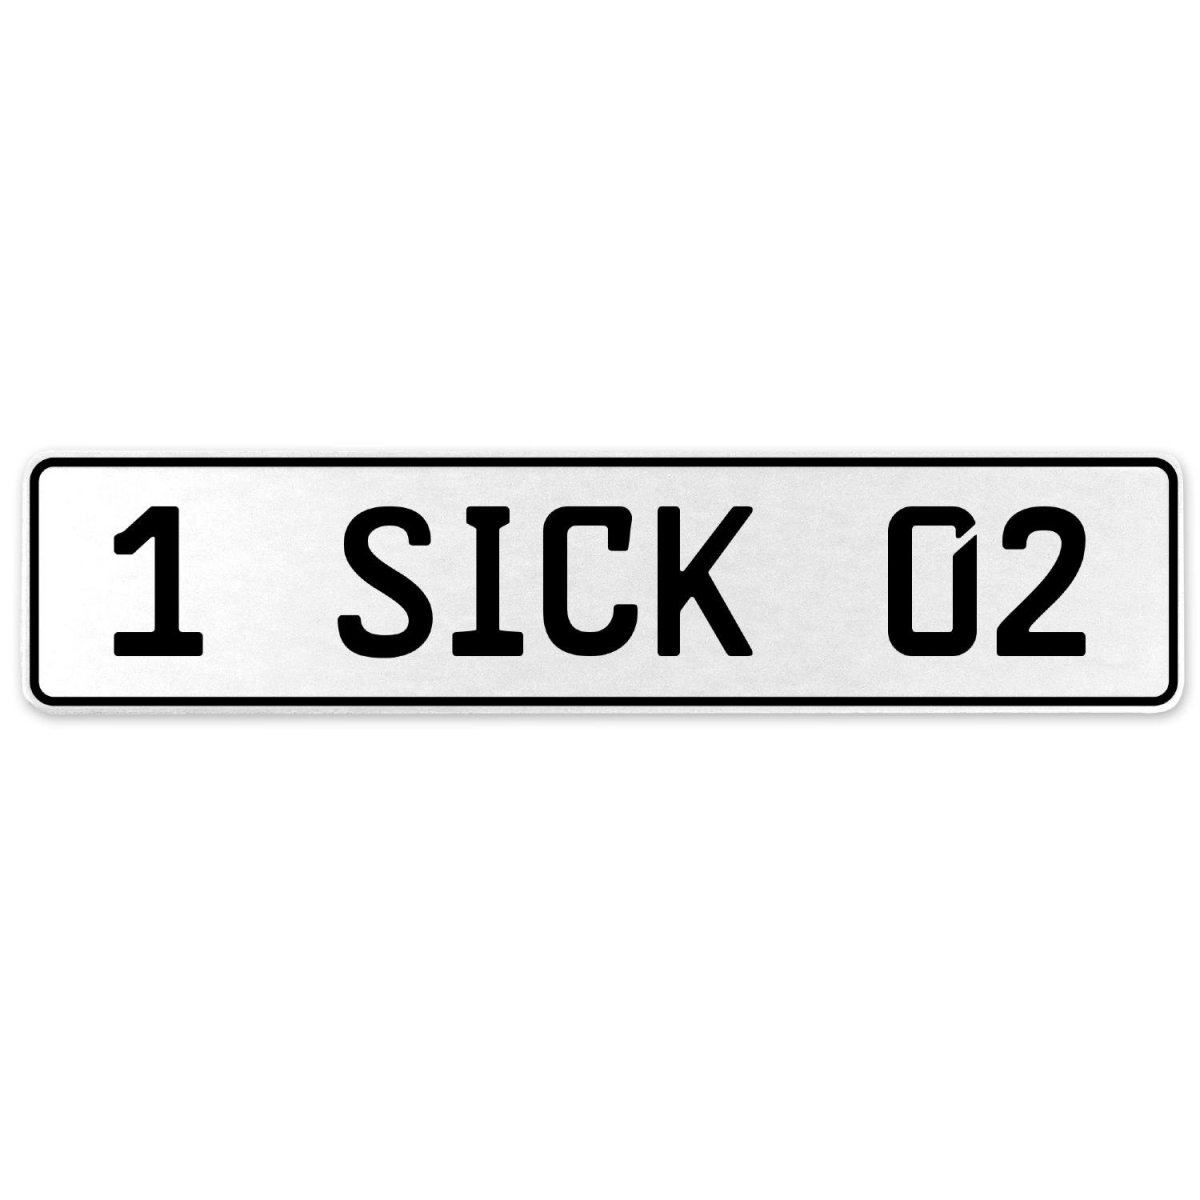 554401 1 Sick 02 - White Aluminum Street Sign Mancave Euro Plate Name Door Sign Wall